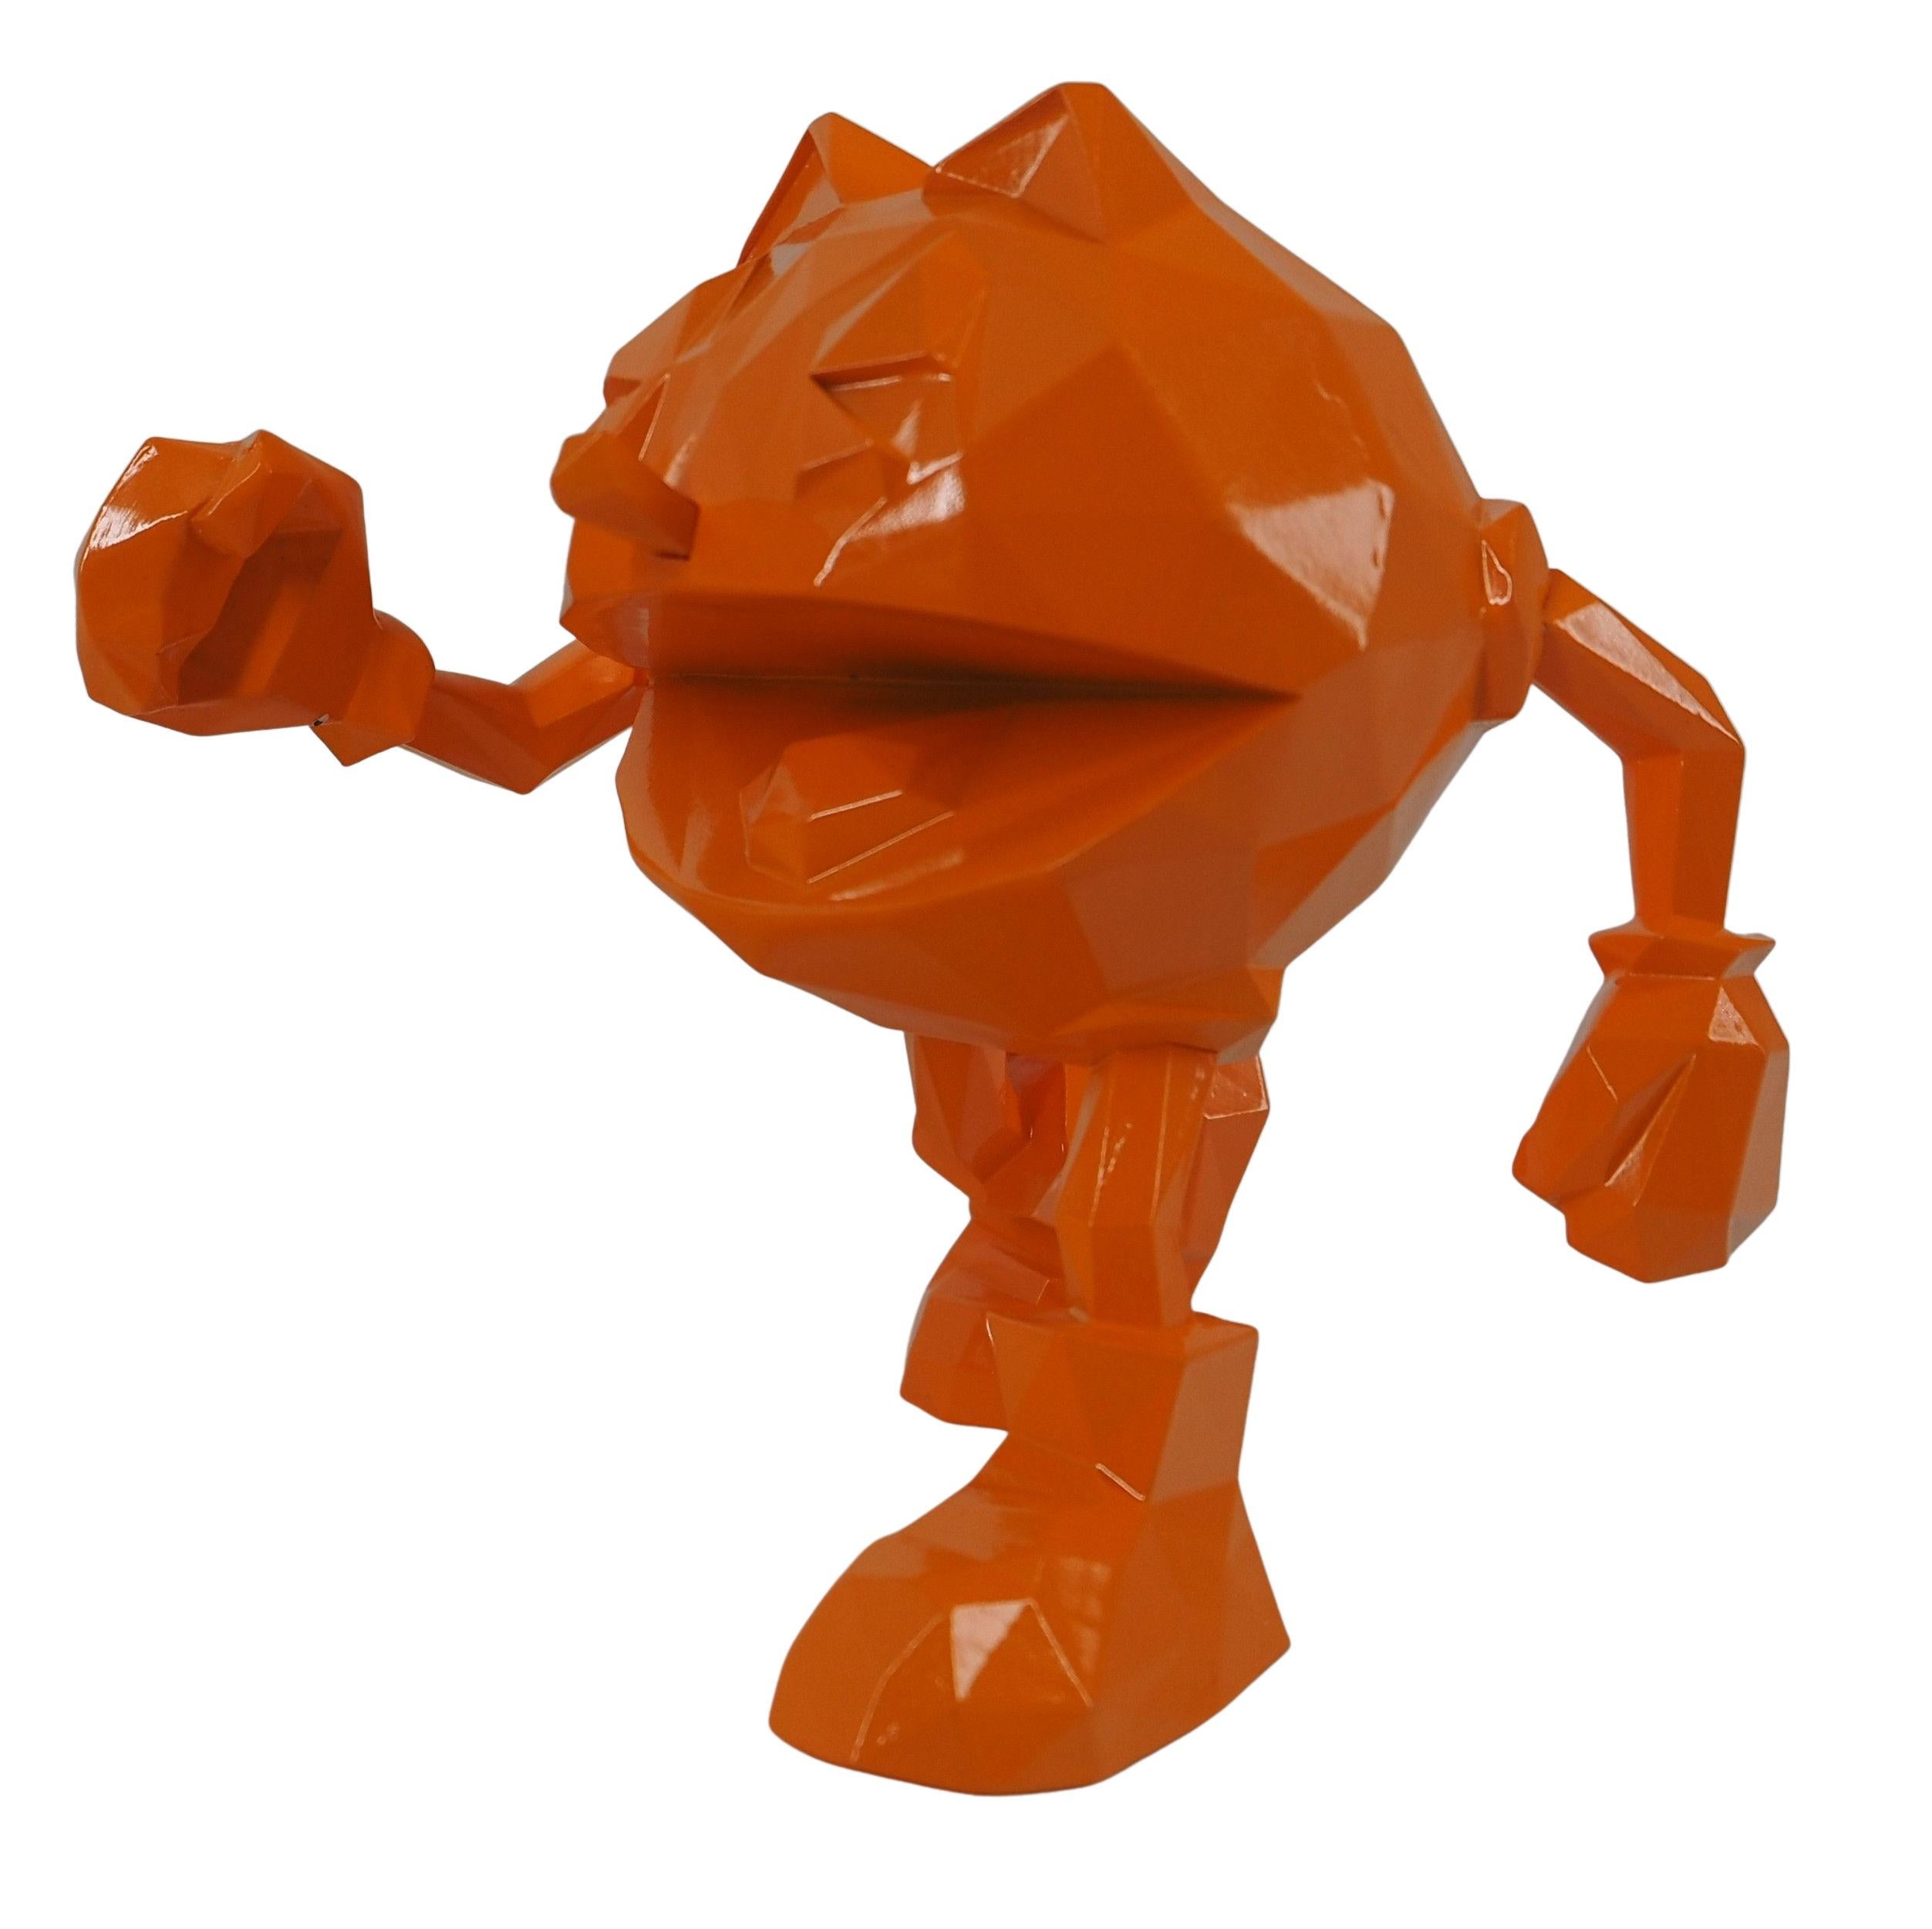 Richard ORLINSKI
Pac Man (Orange edition)

Sculpture in resin
Metallic Orange
About 10 cm (c. 3.9 in)
Presented in original box

Excellent condition